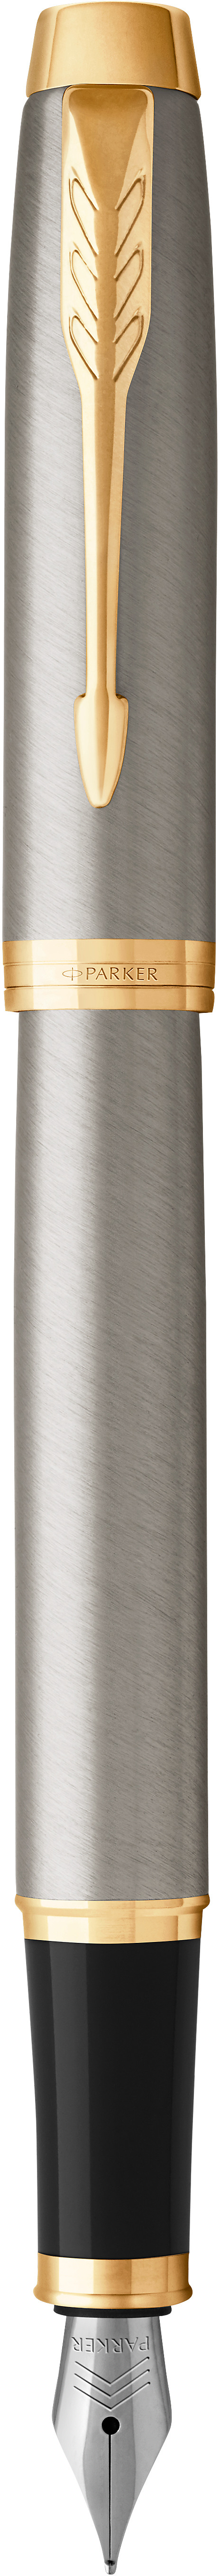 PARKER Stylo IM GC M 1931656 Brushed Metal